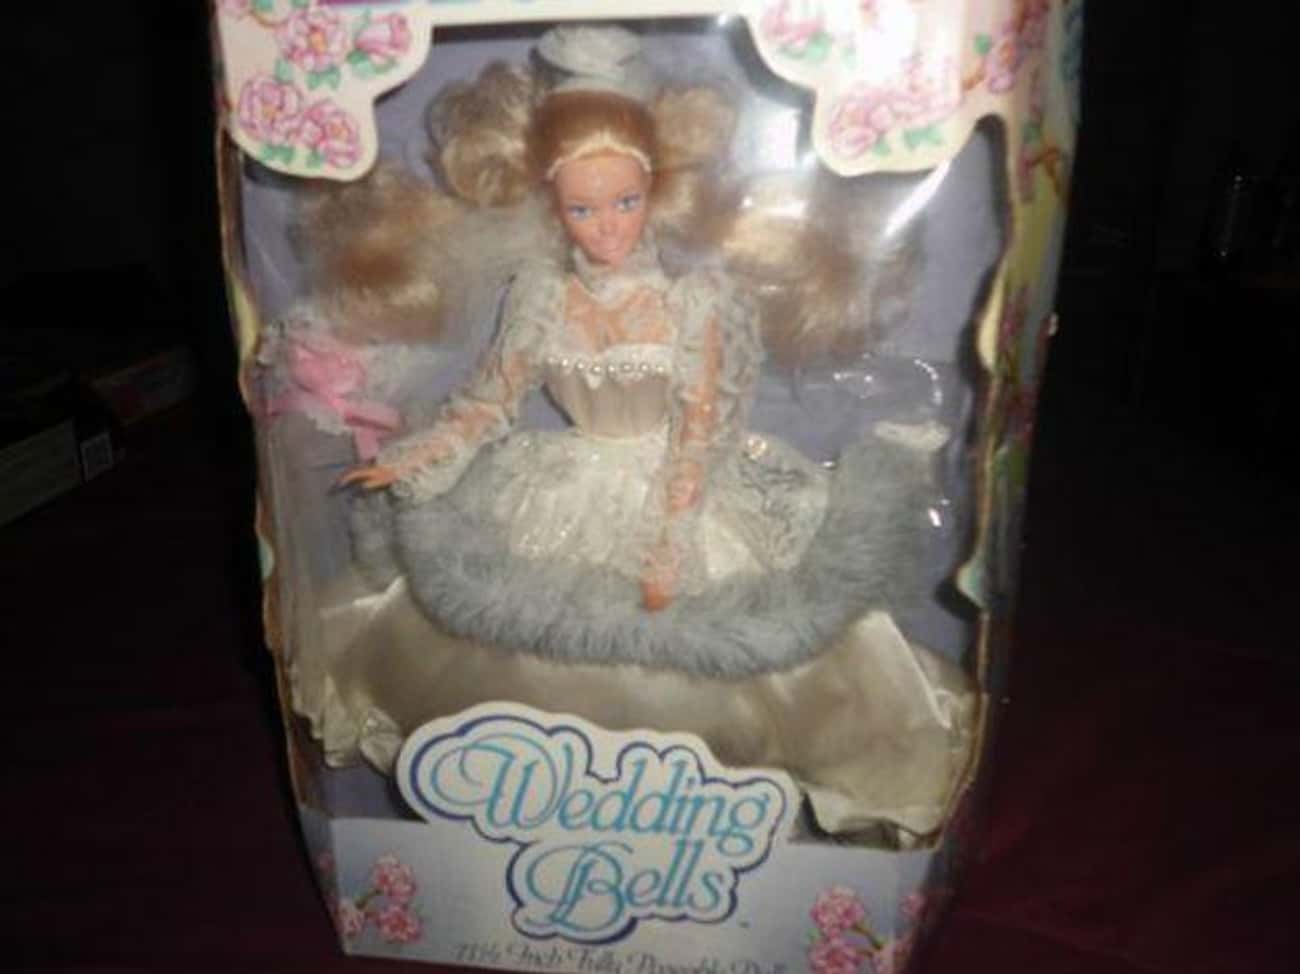 Modern Bride Barbie (1990): $15,900